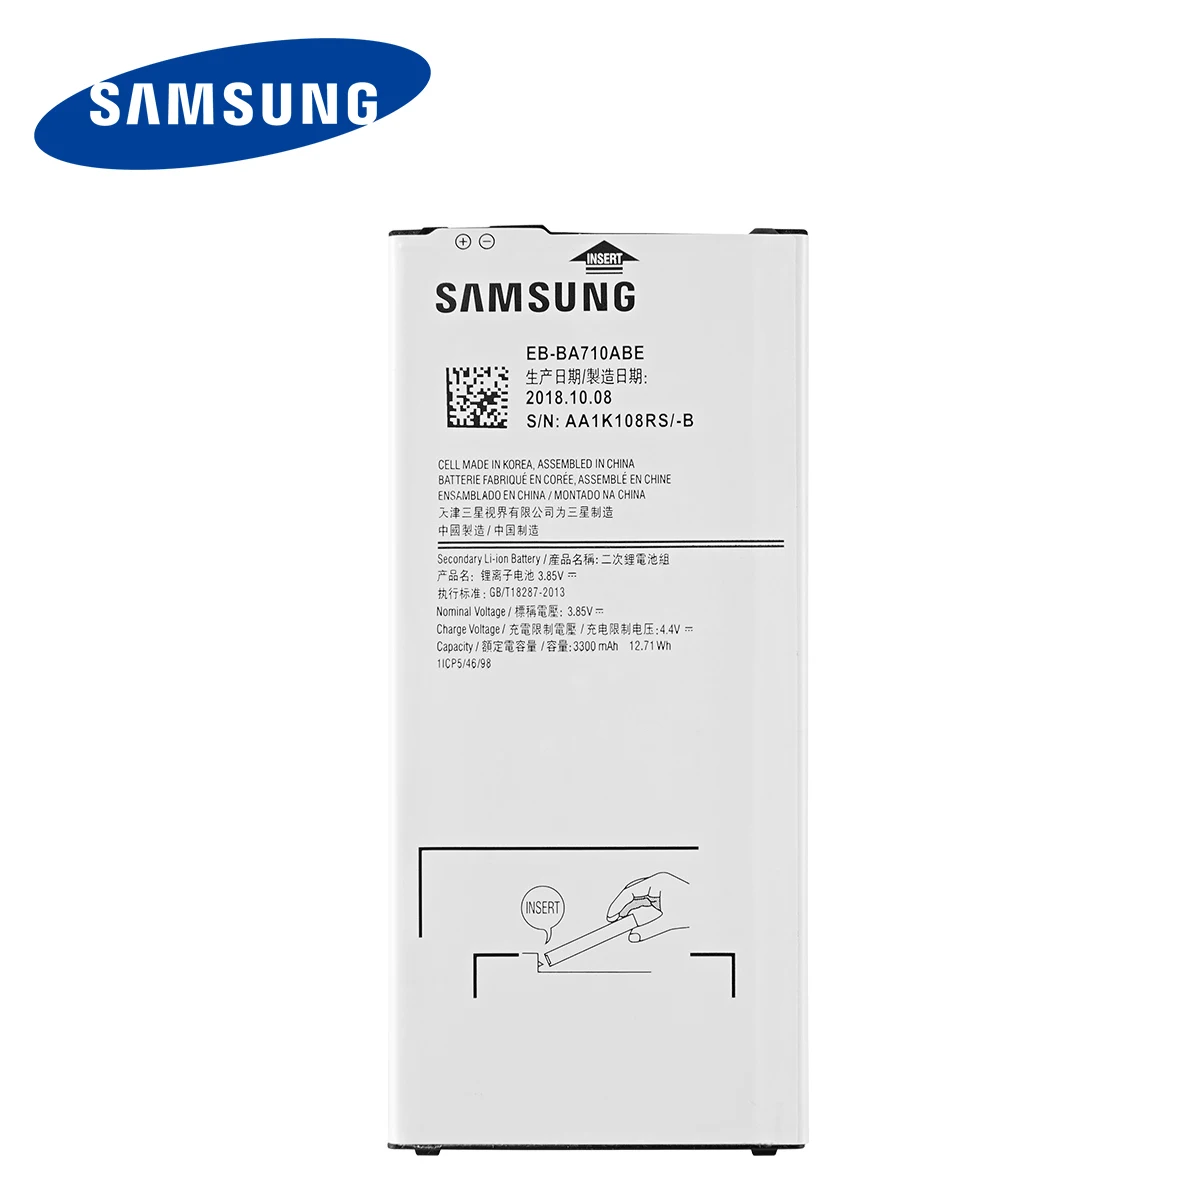 Originalni SAMSUNG EB-BA710ABE 3300mAh baterija Za Samsung GALAXY A7 A7100 A710 A7109 A710F 2016 Edition Mobilni Telefon +Orodja